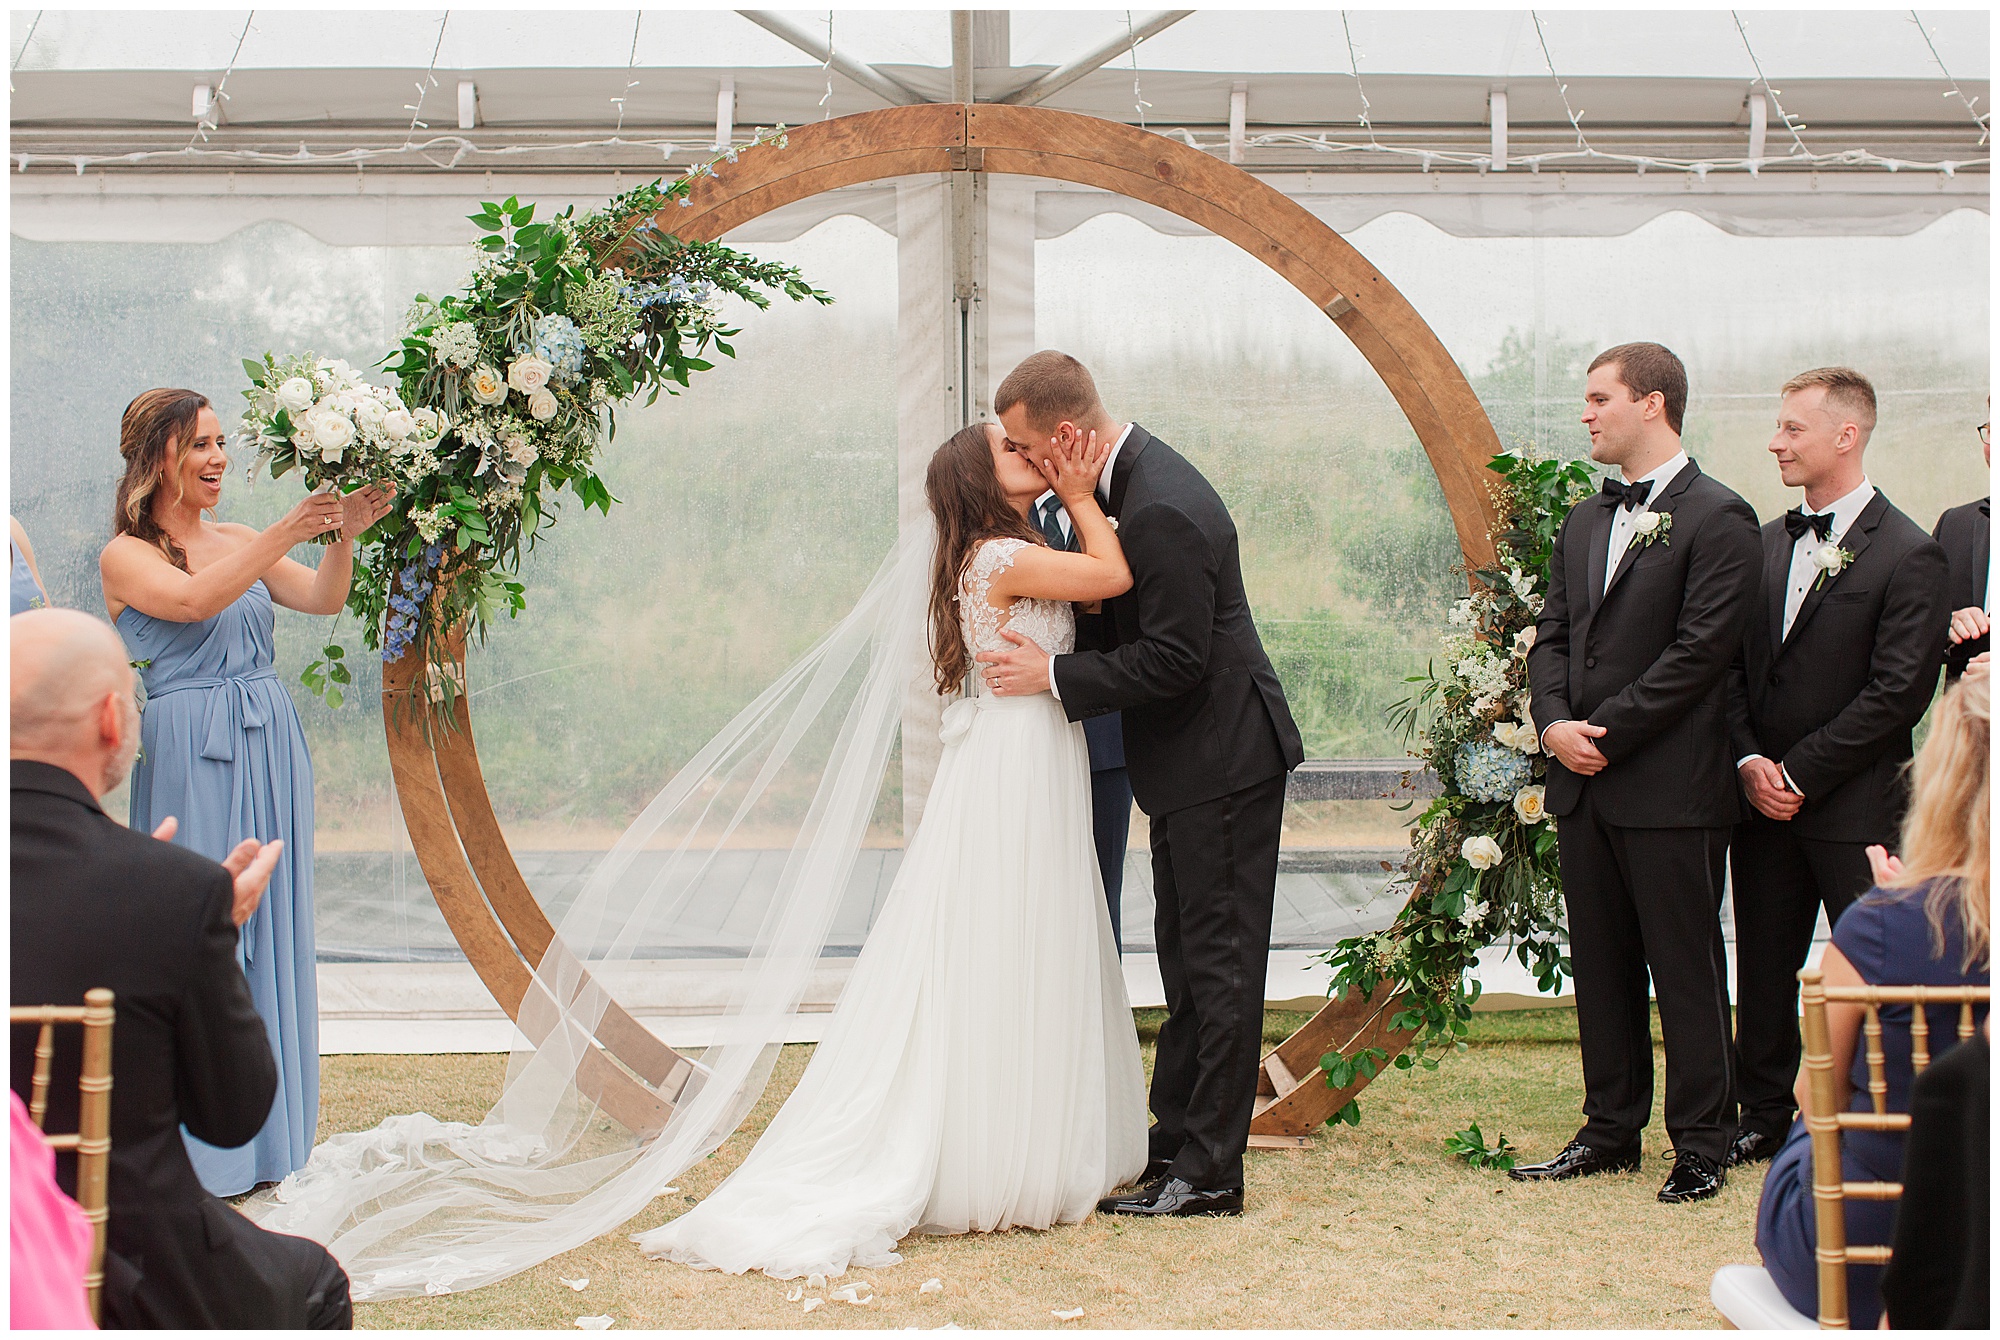 Danielle & Chris, East Beach wedding, Hampton Roads weddings, Kelley Stinson Photography, tent ceremony, clear tent